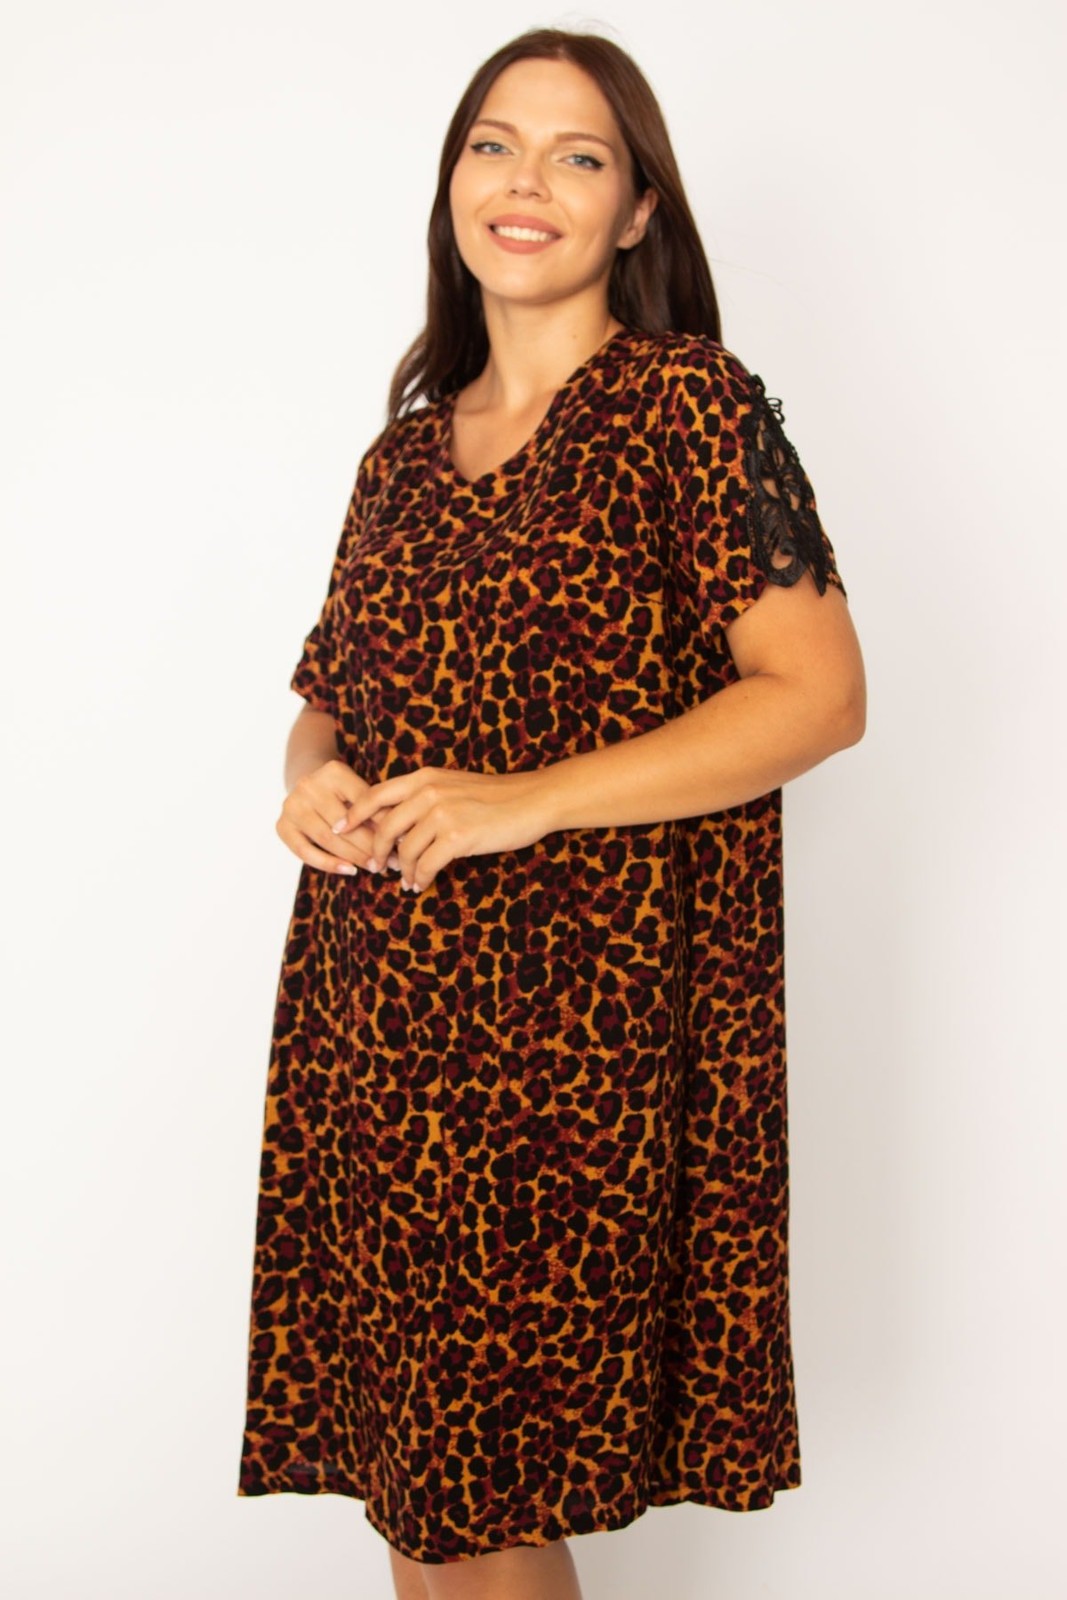 Şans Women's Plus Size Leo Lace Detailed V-Neck Leopard Patterned Dress